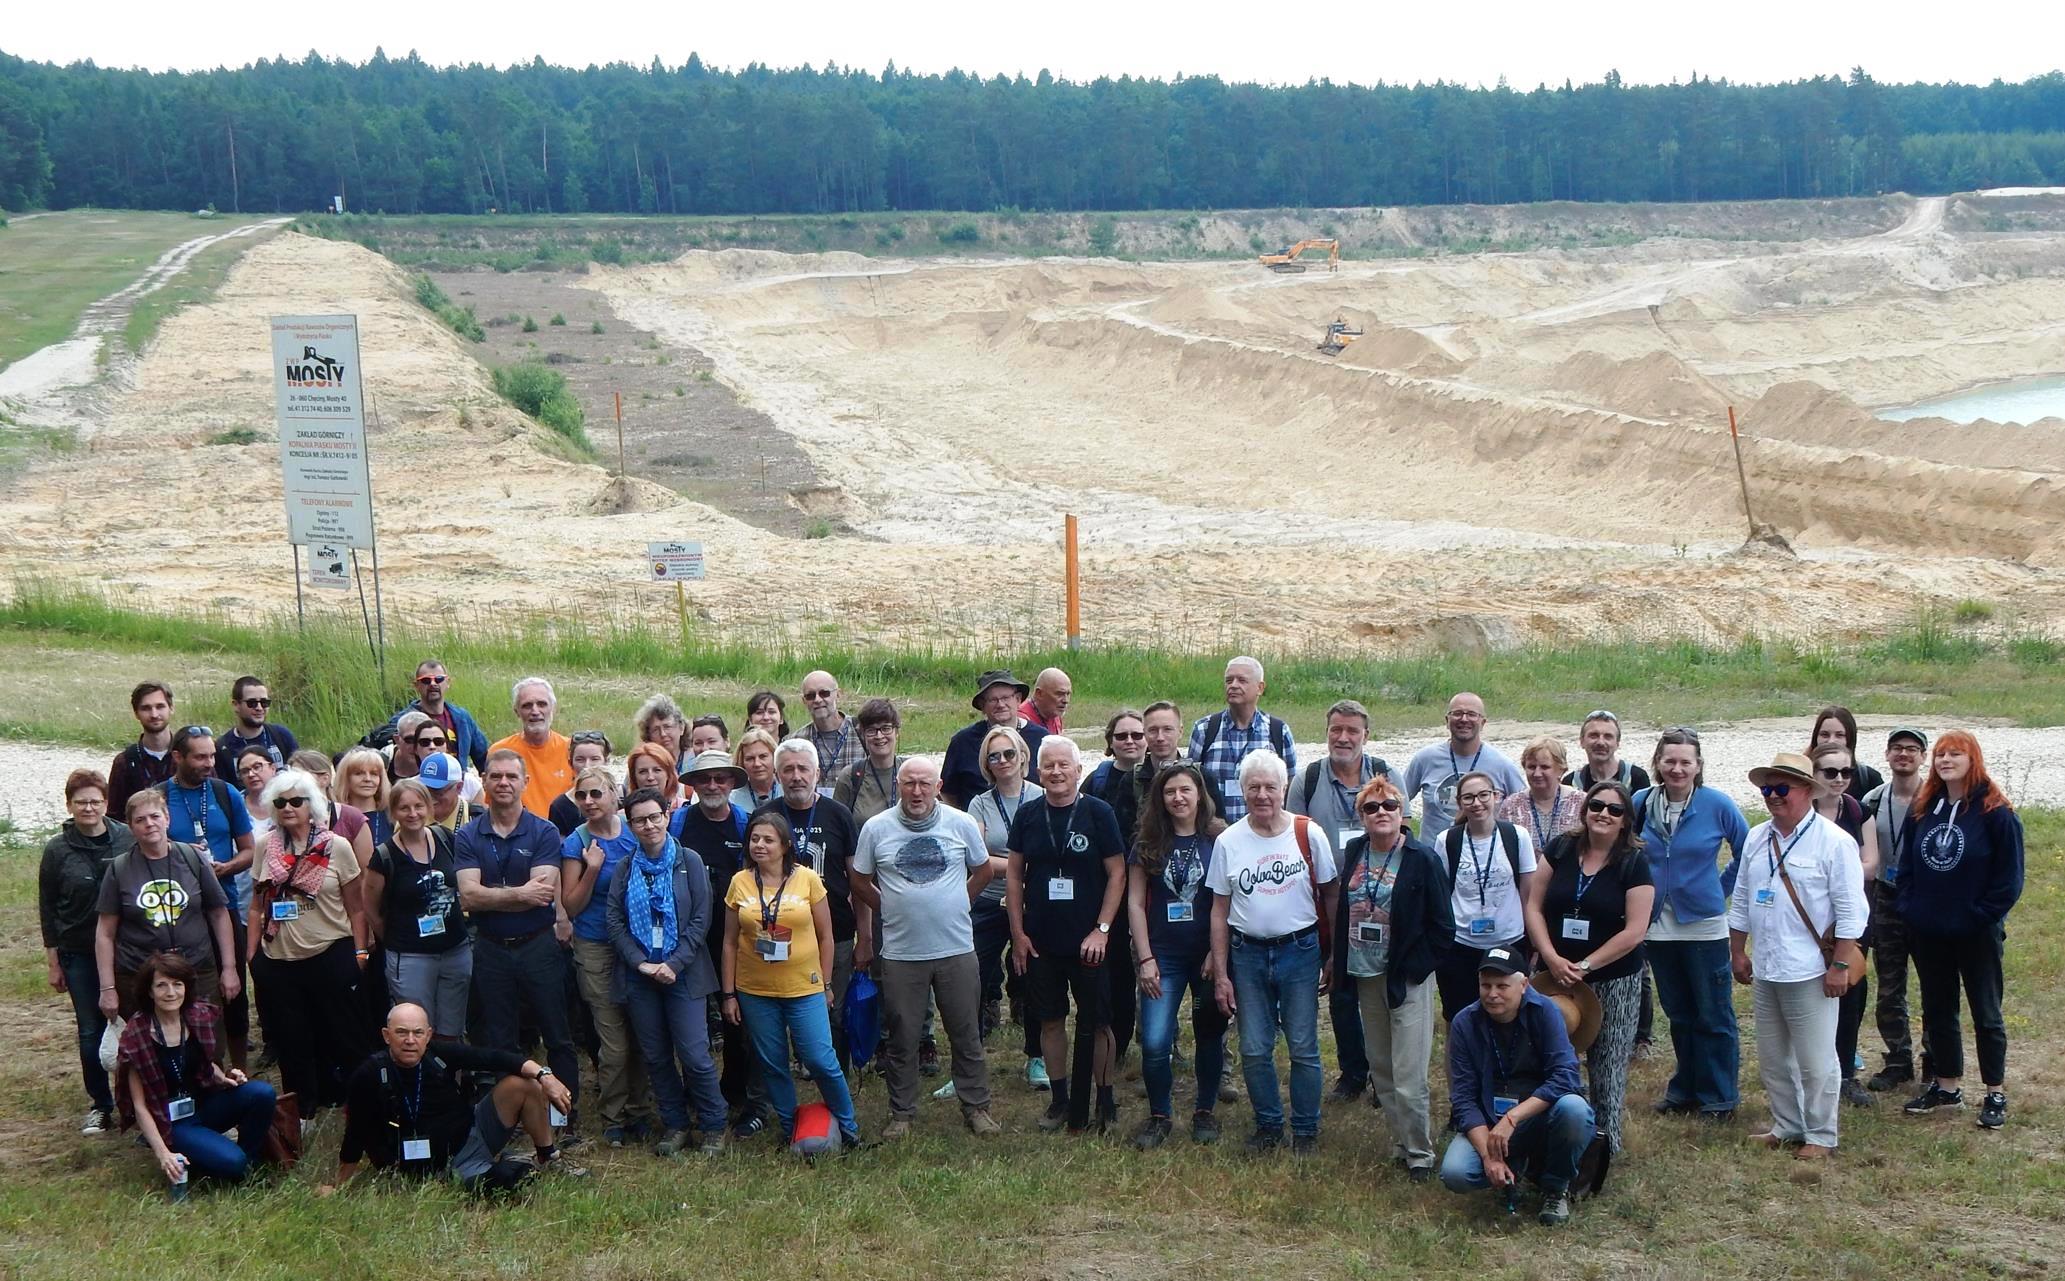 Uczestnicy konferencji na tle kopalni piasku Mosty (fot. W. Morawski)